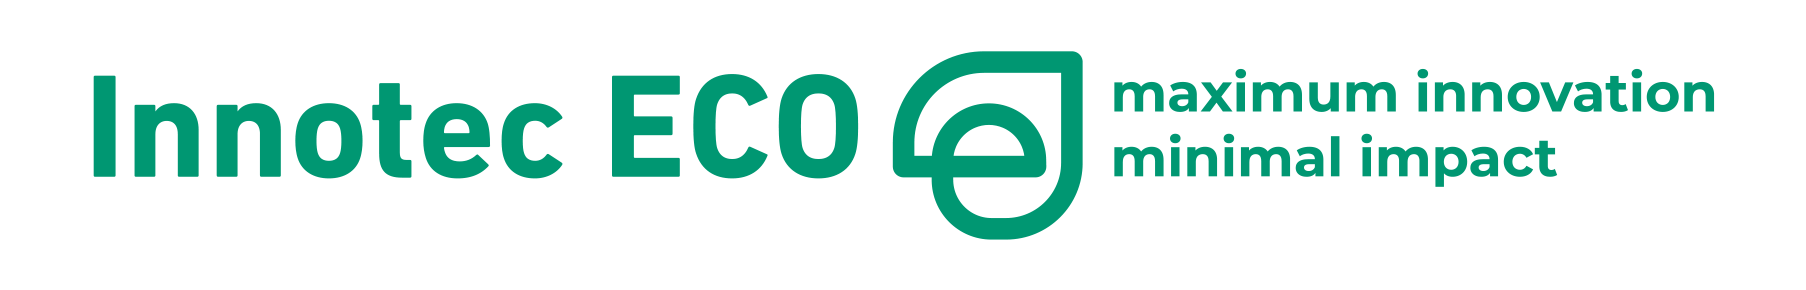 Innotec_ECO-Green